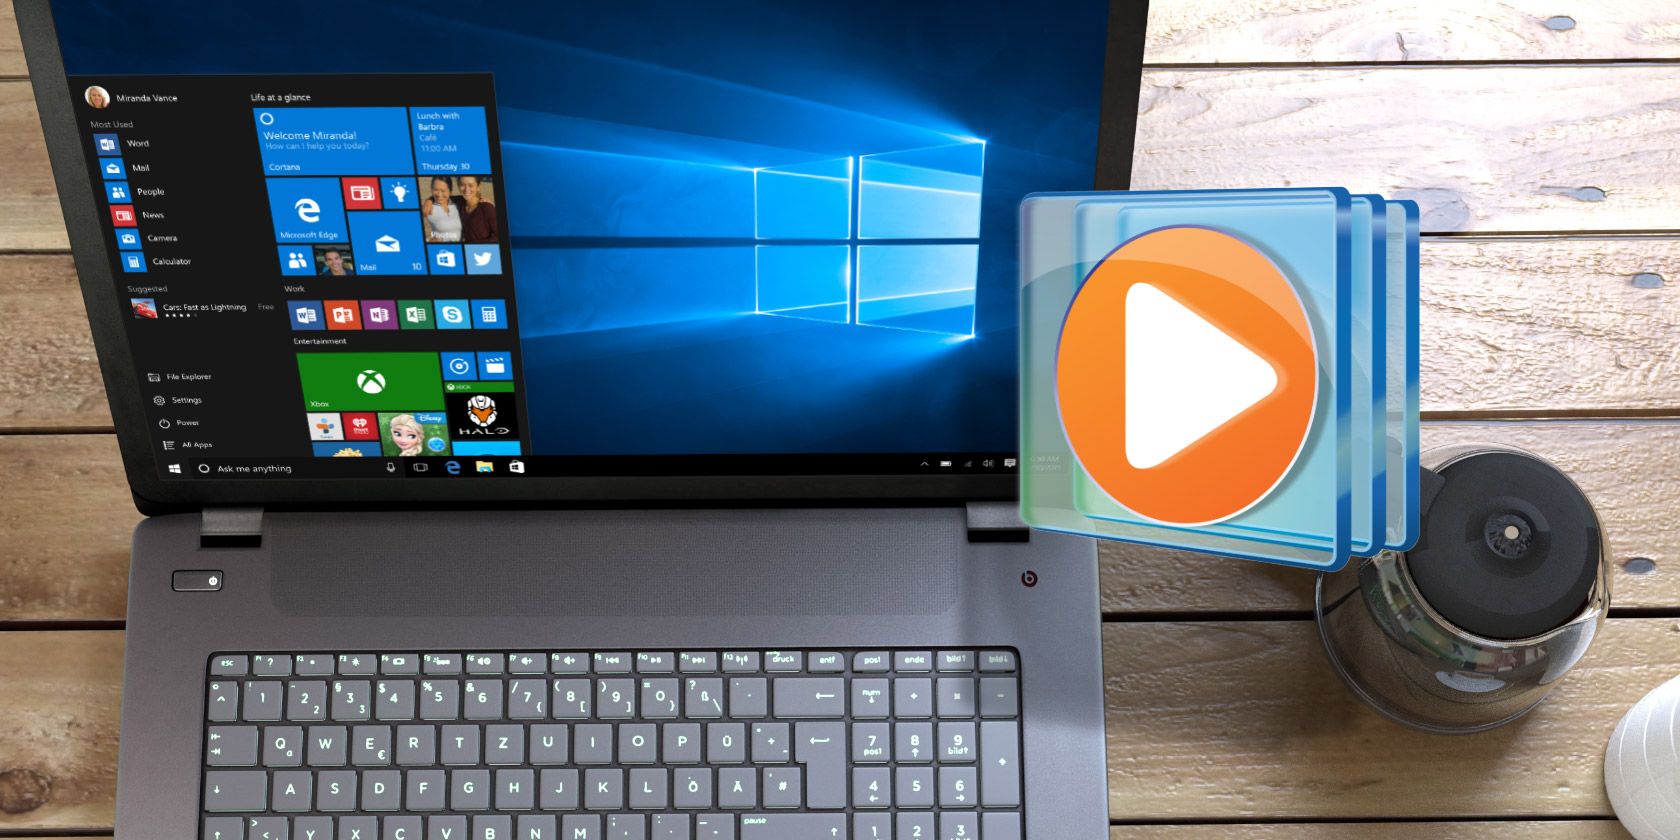 Injusto Subvención exhaustivo How to Download Windows Media Player 12 for Windows 10